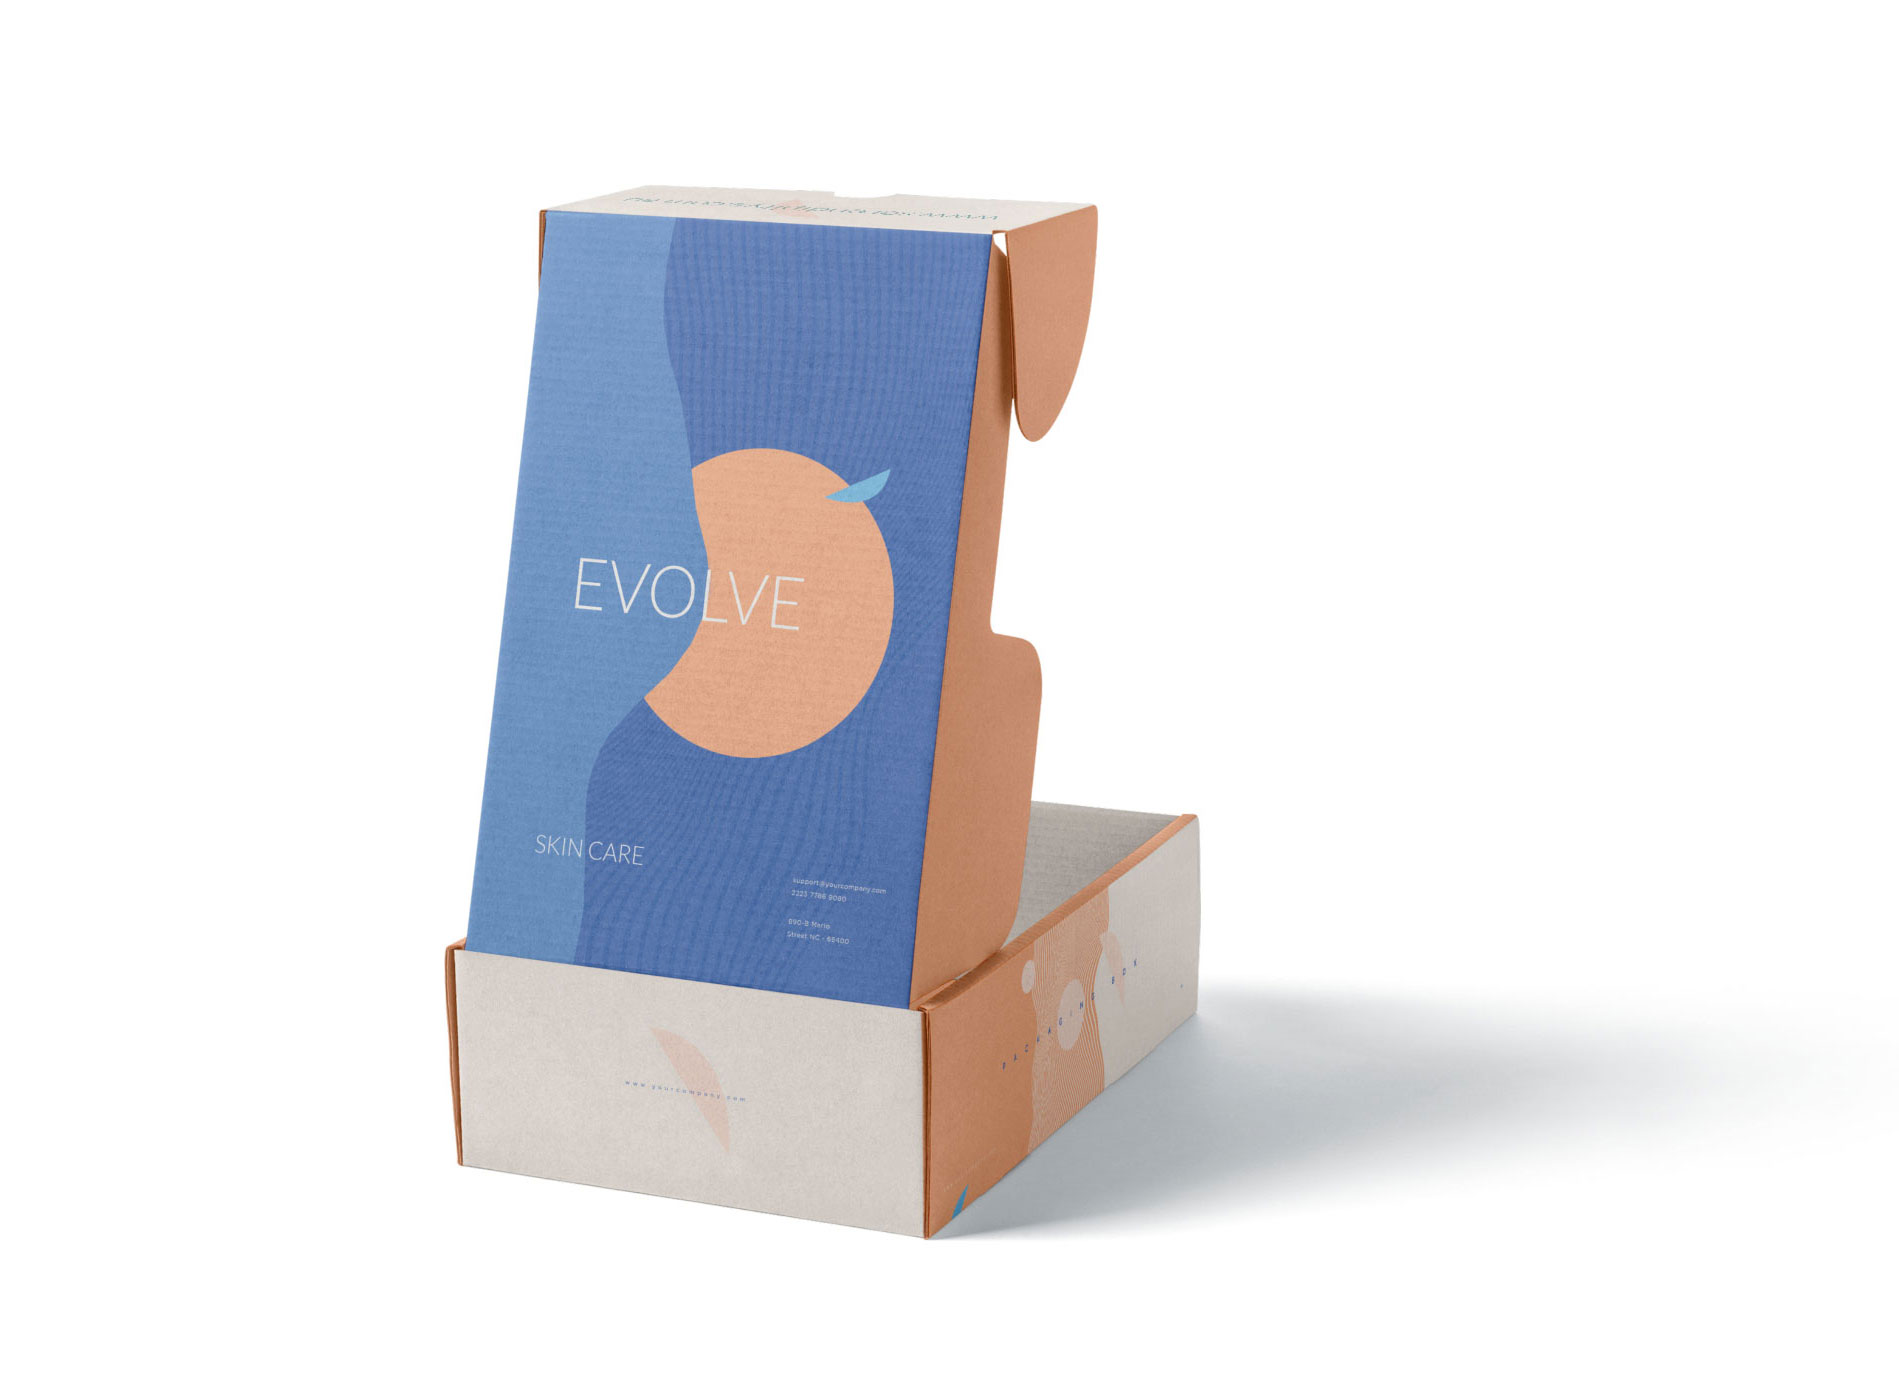 Flexo packaging